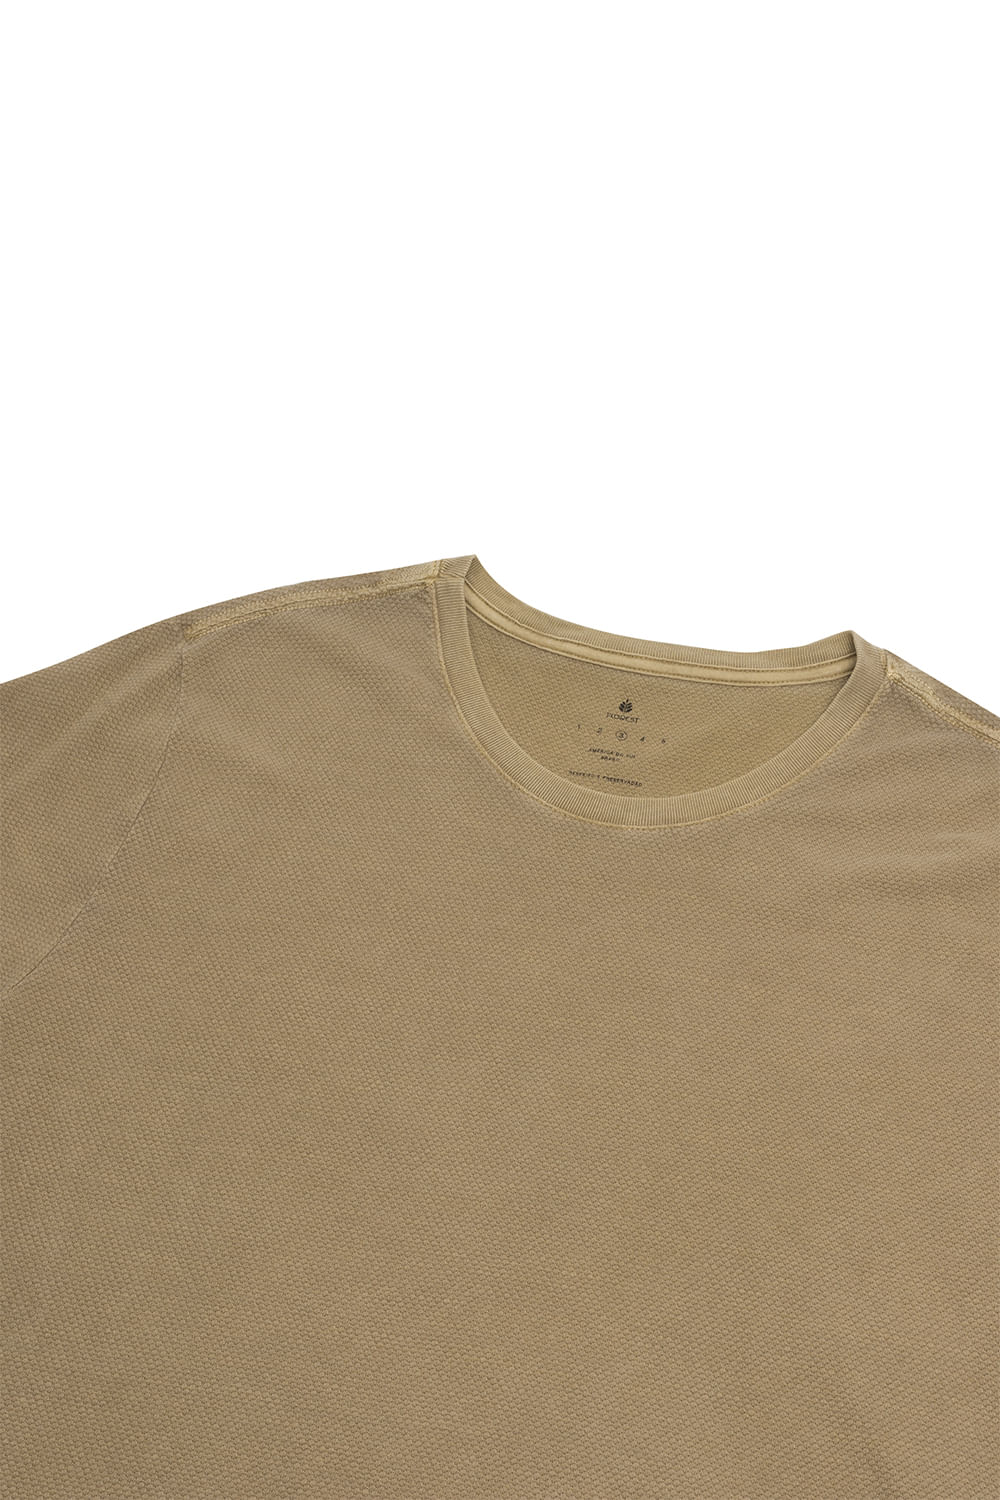 Camiseta-Huaraz-Waffle-Marrom-Detalhe